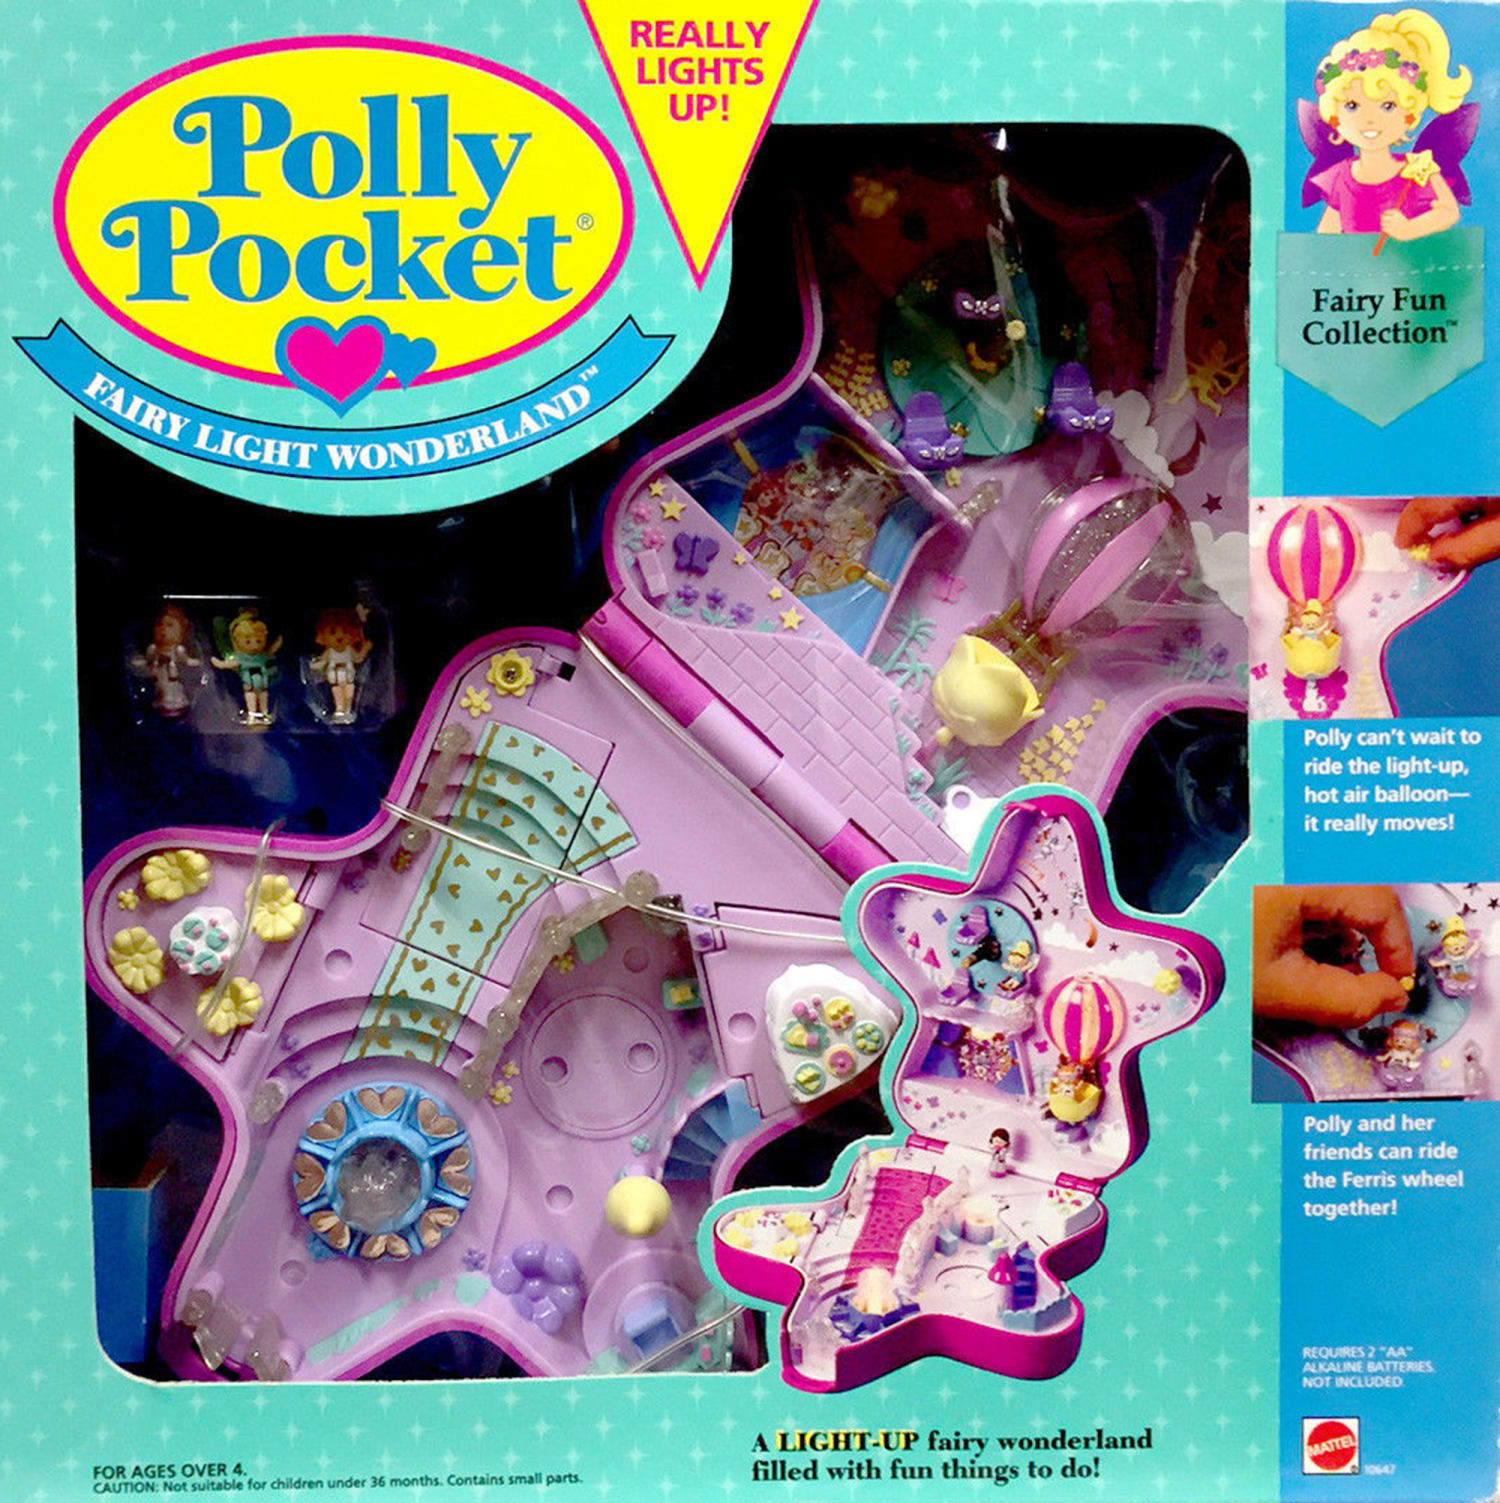 polly pocket where to buy